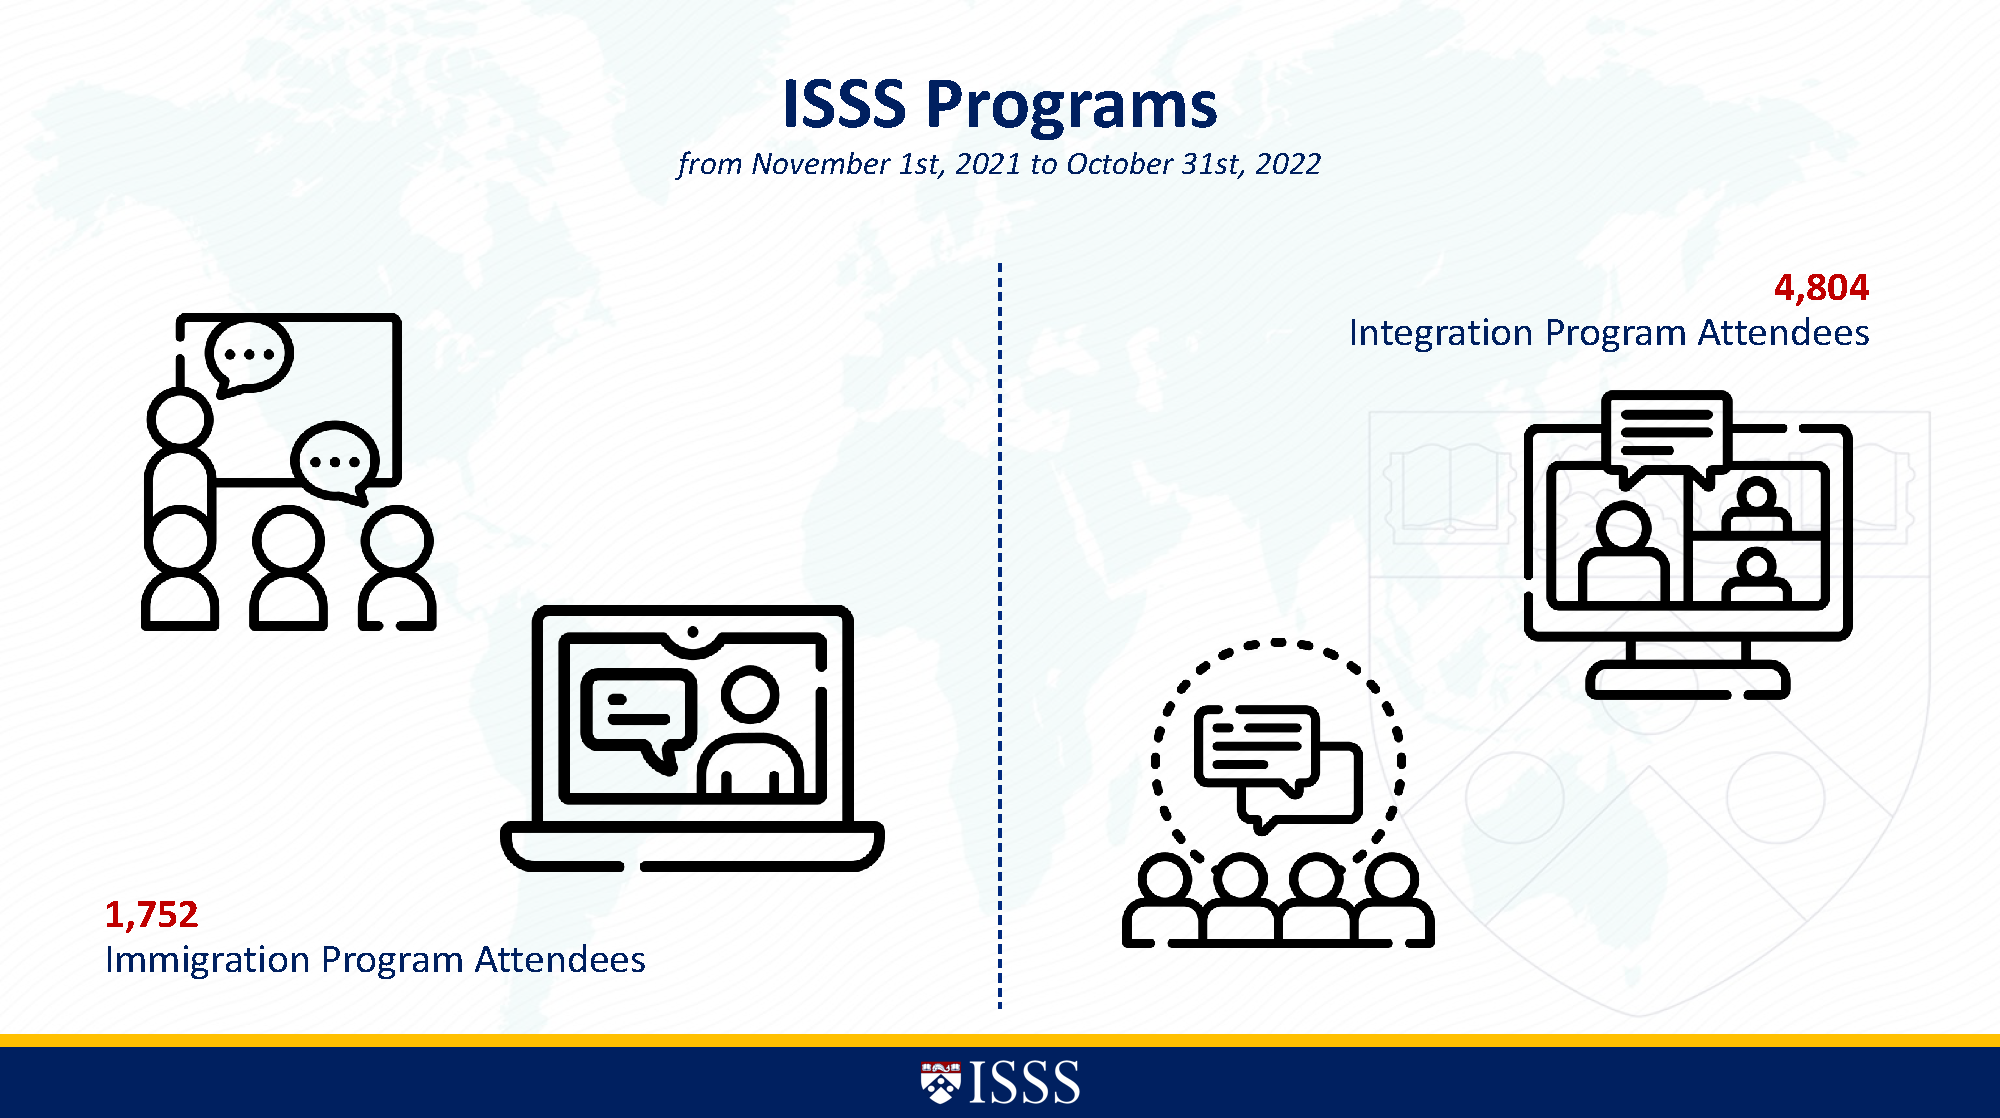 Visual ISSS programs metrics of 1752 immigration program attendees and 4804 integration program attendees